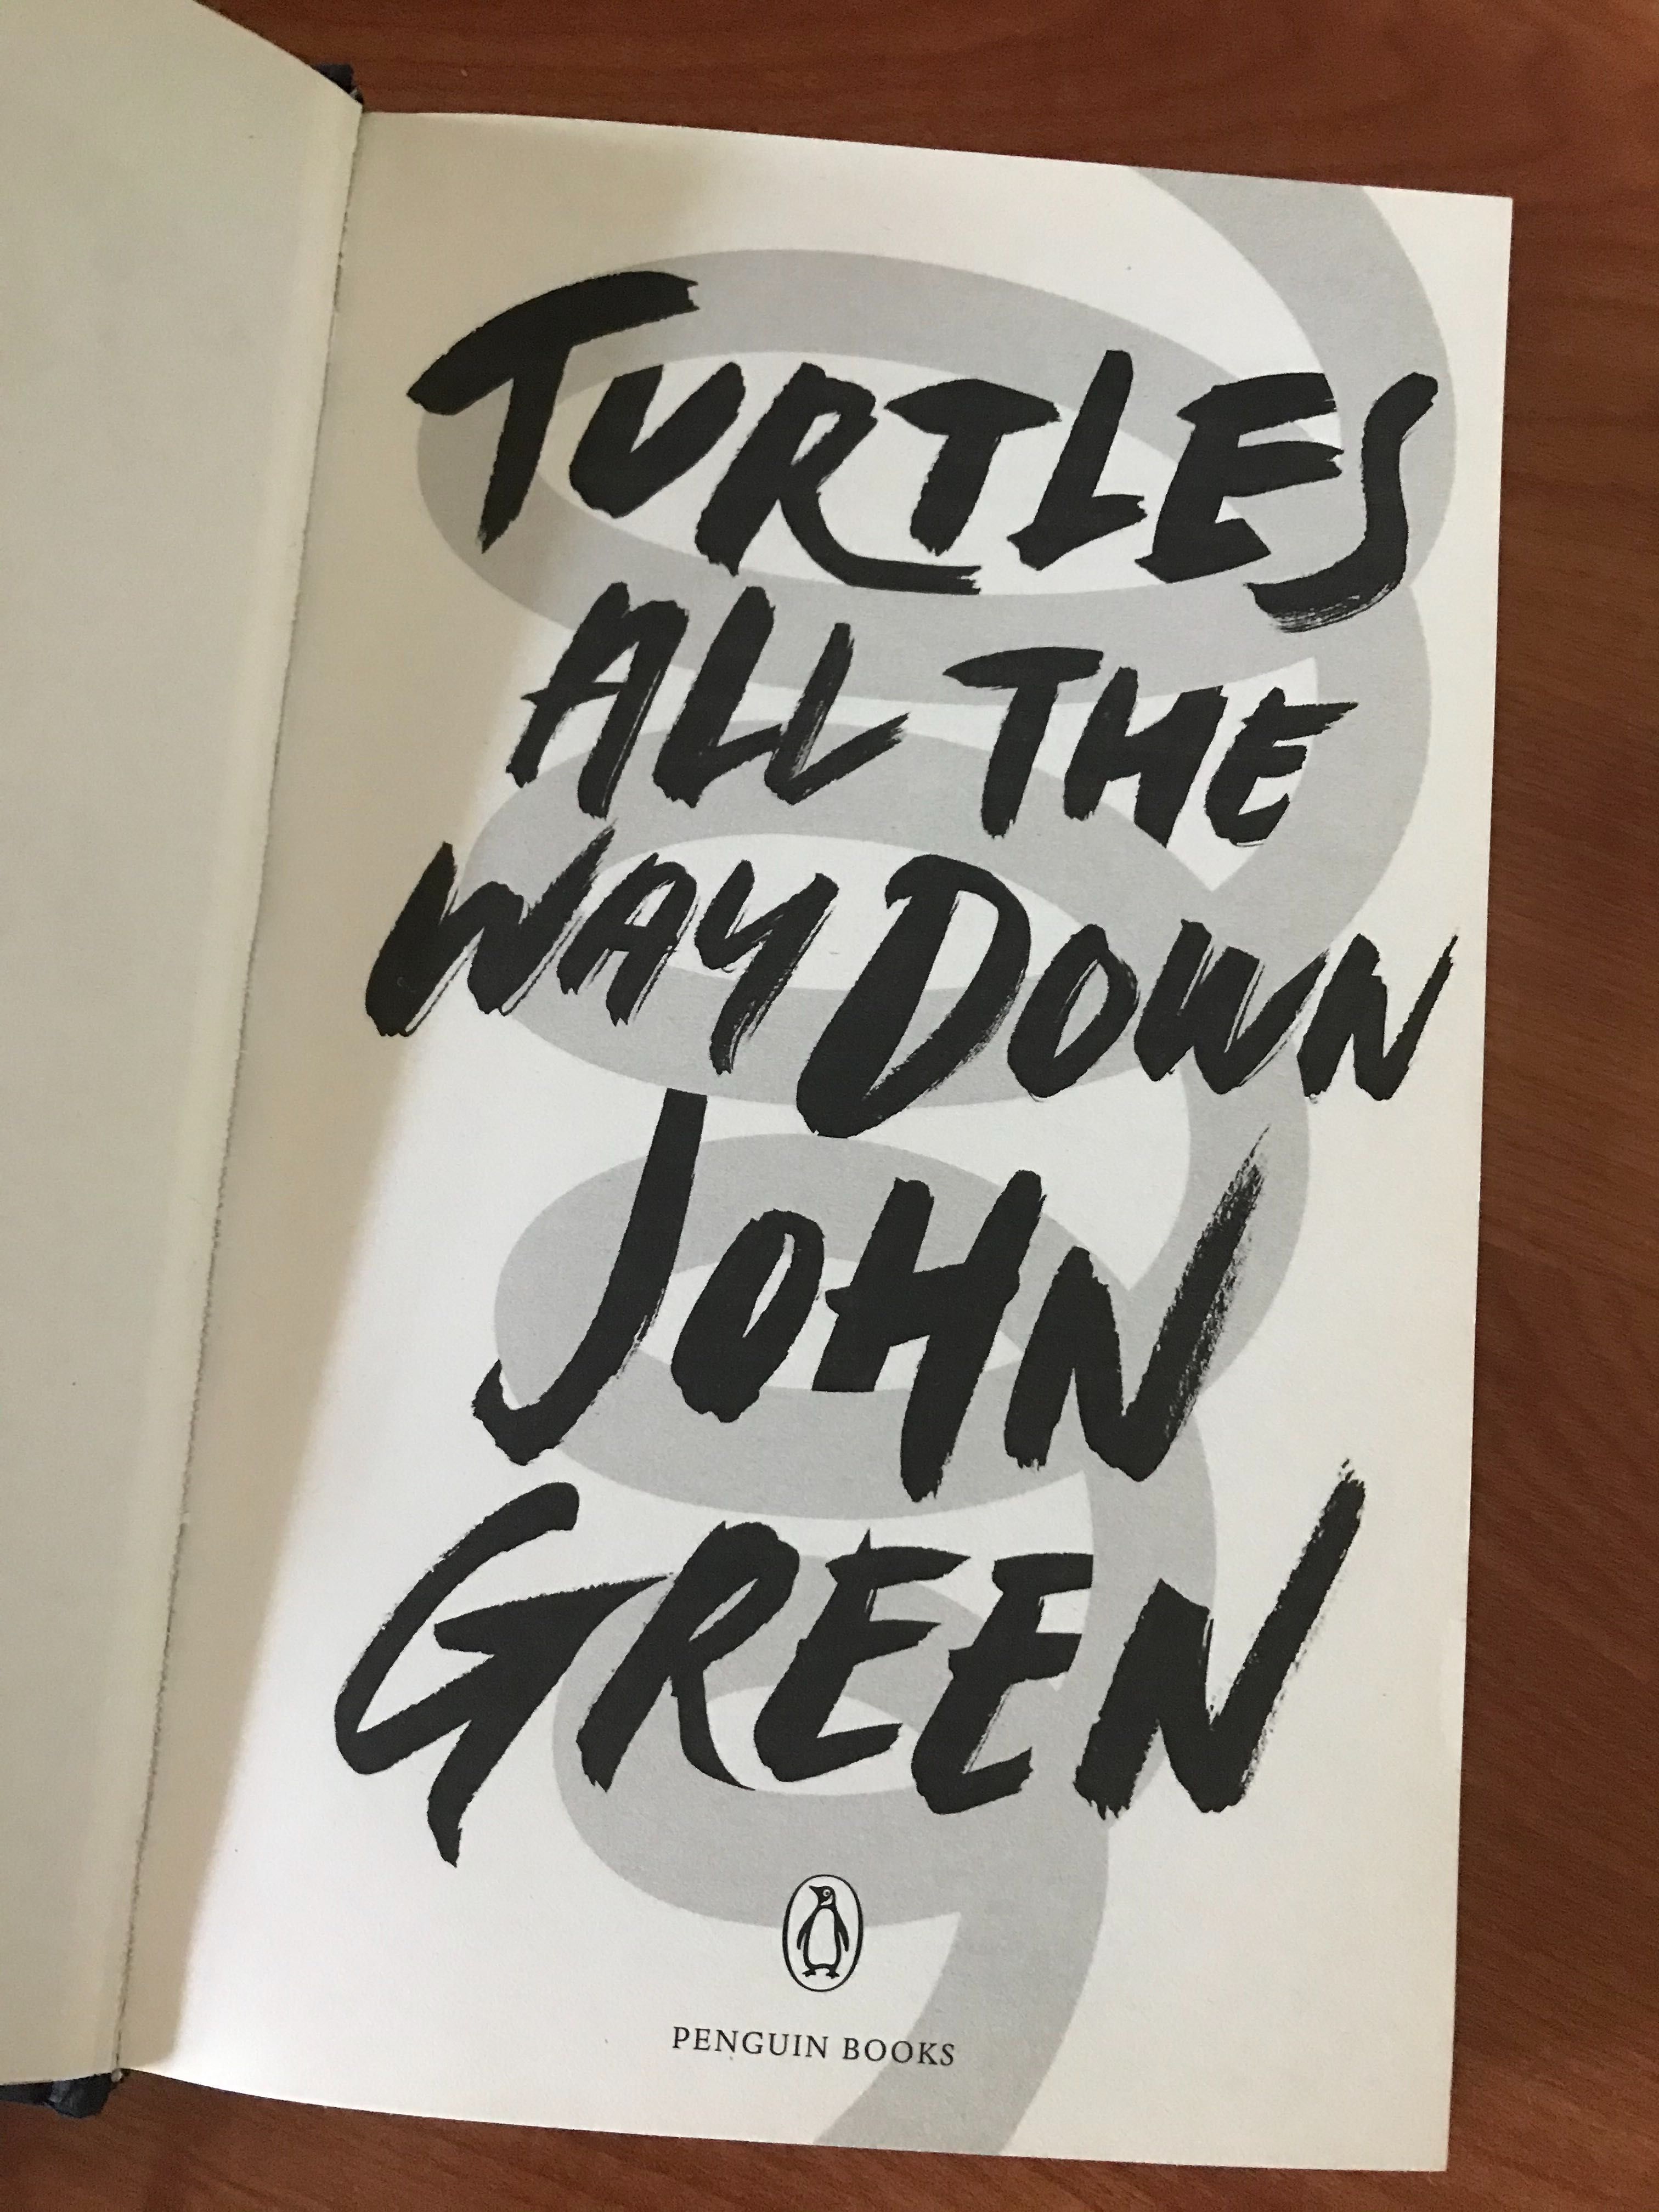 Книга «Черепахи и нет им конца» от Джона Грина на английском языке